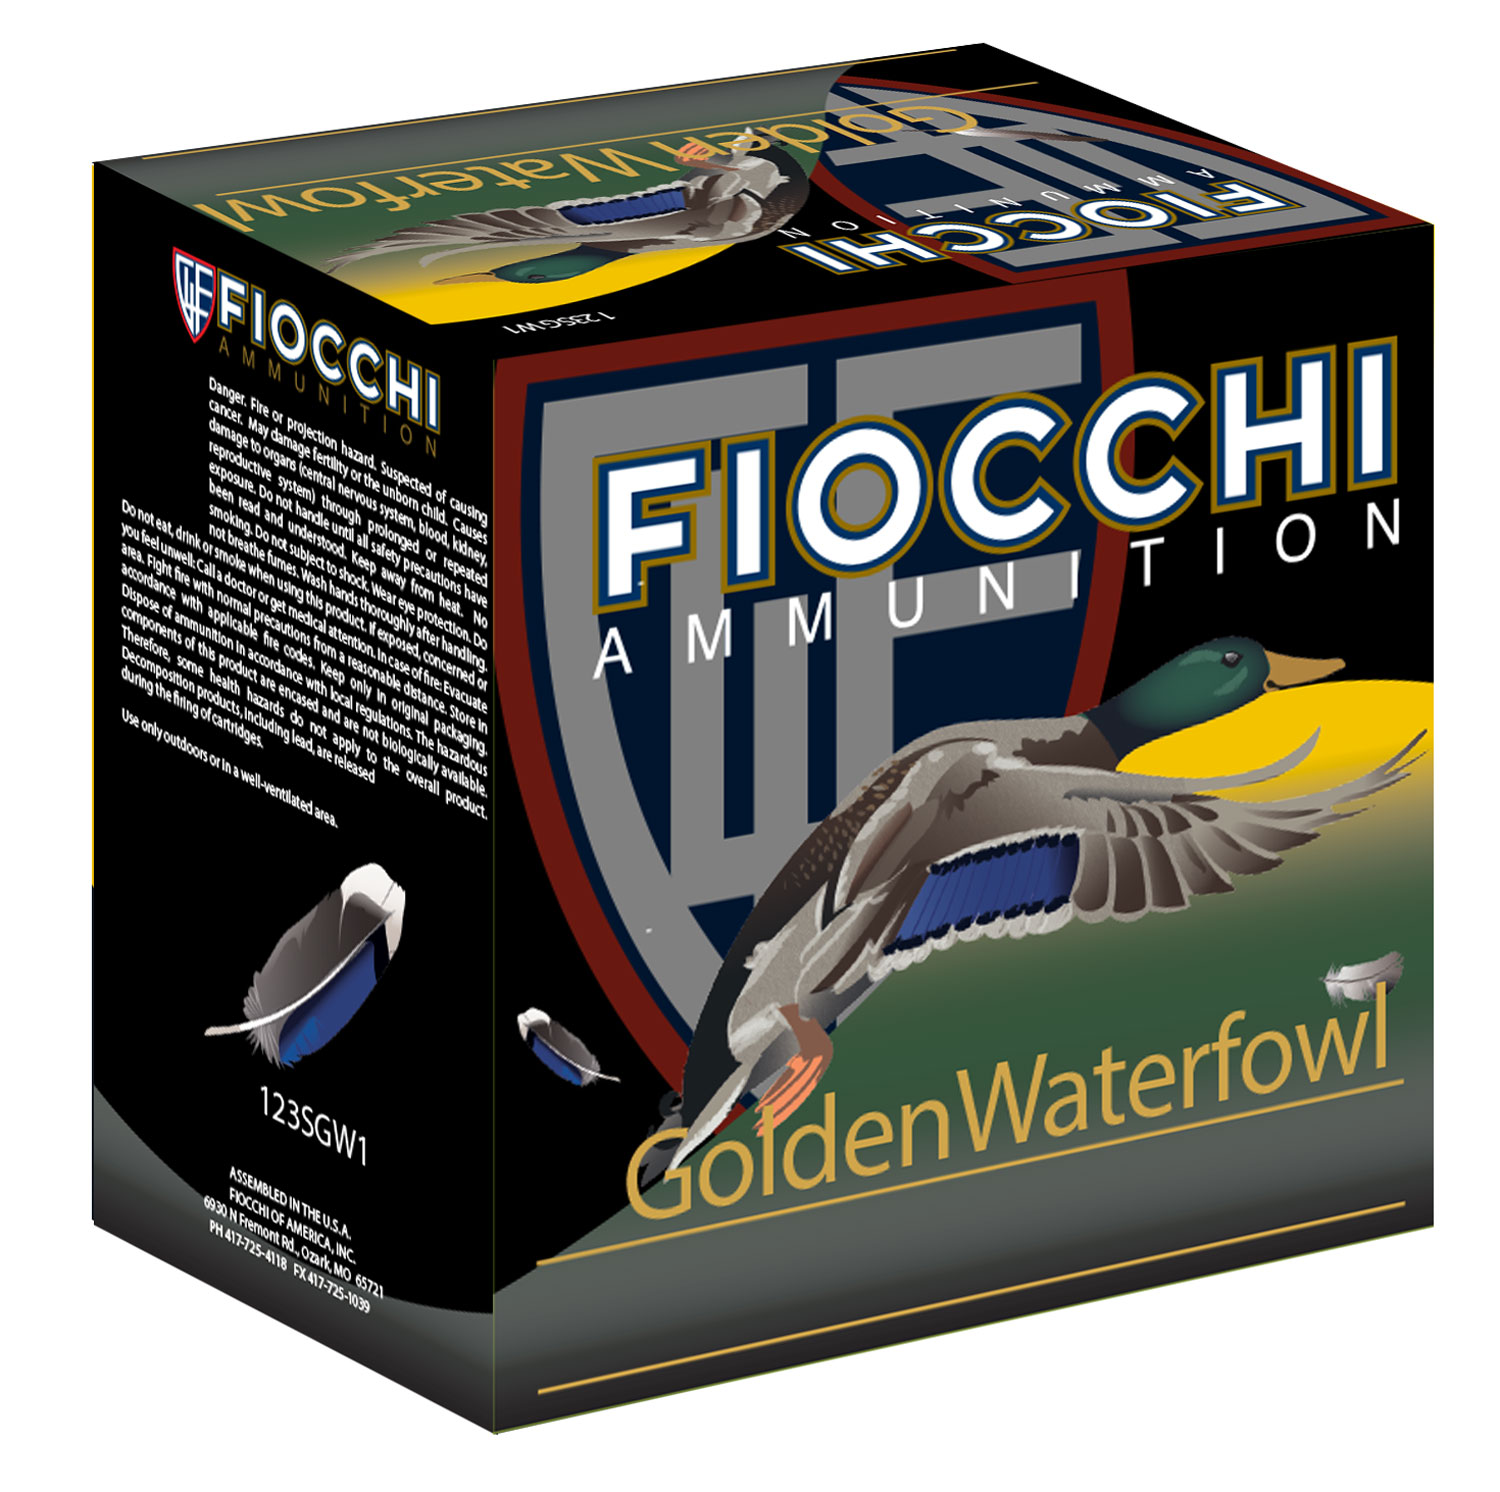 Fiocchi 123SGW1 Golden Waterfowl Waterfowl 12 Gauge 3